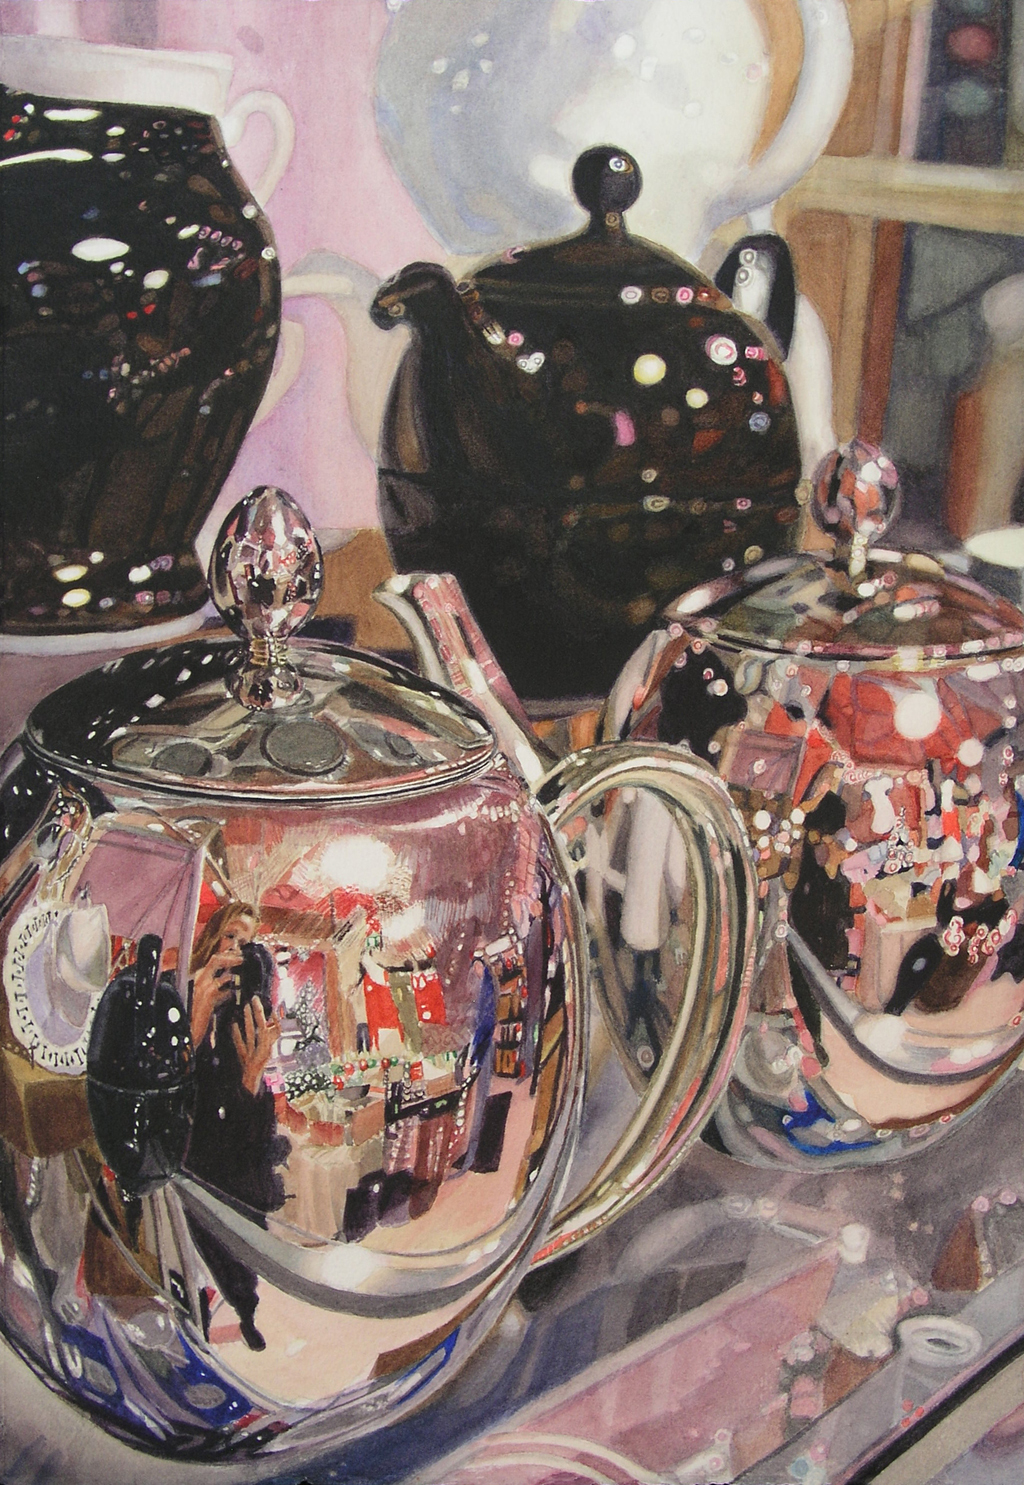 Portrait of the Artist in Market Spice Teapots